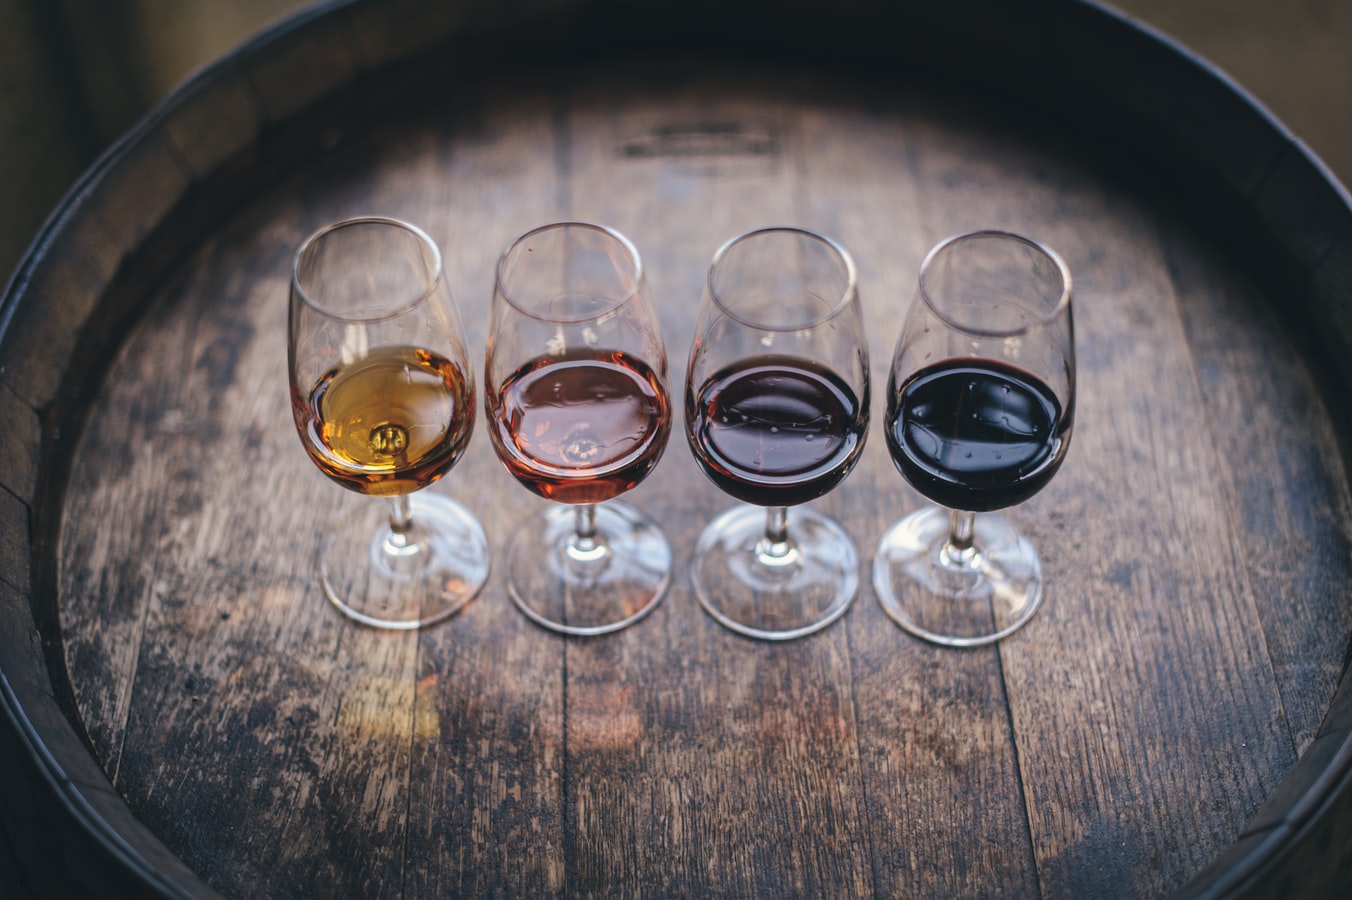 Flight of wine in small glasses on wine barrel